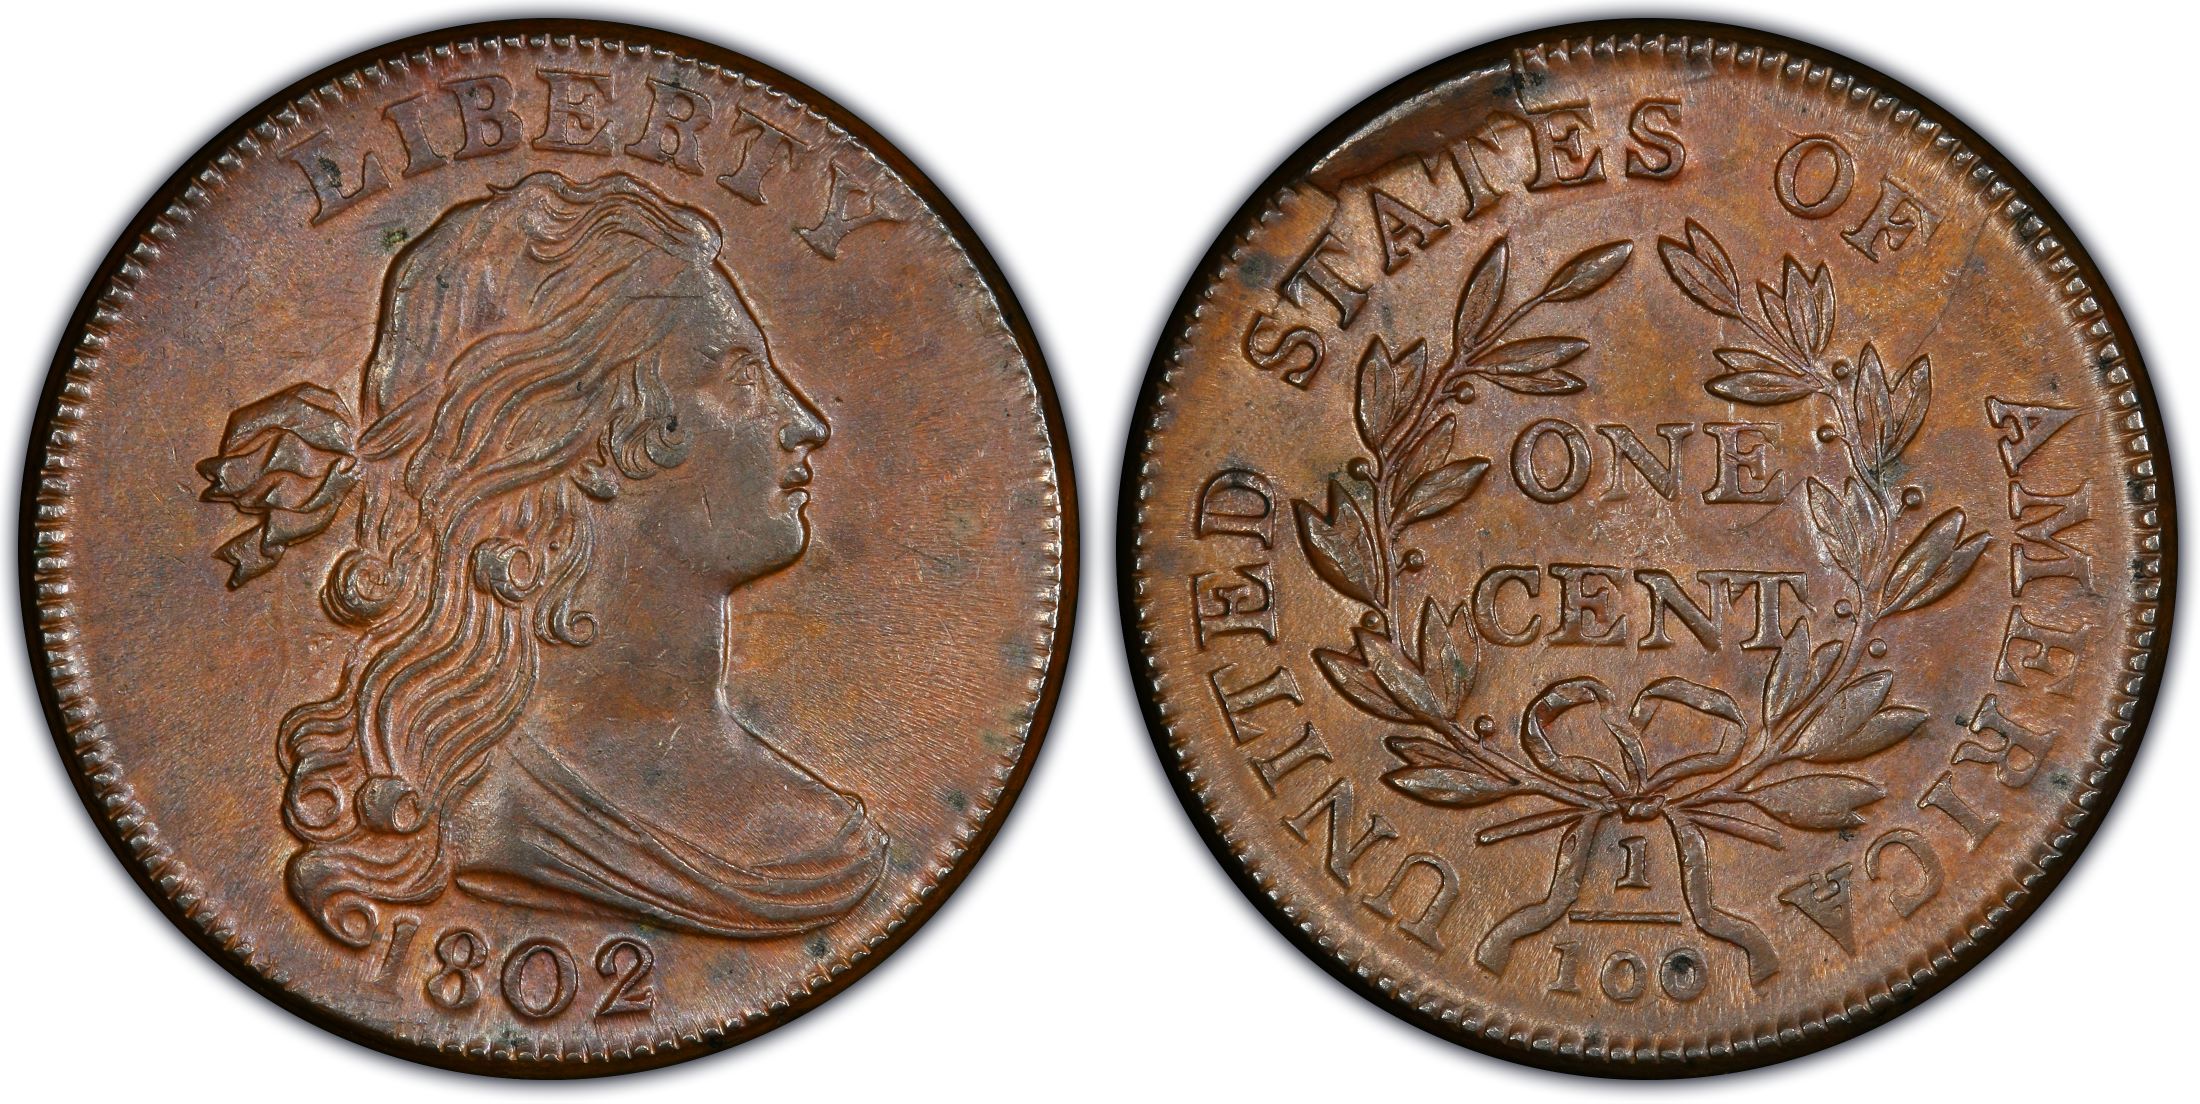 1802 large cent